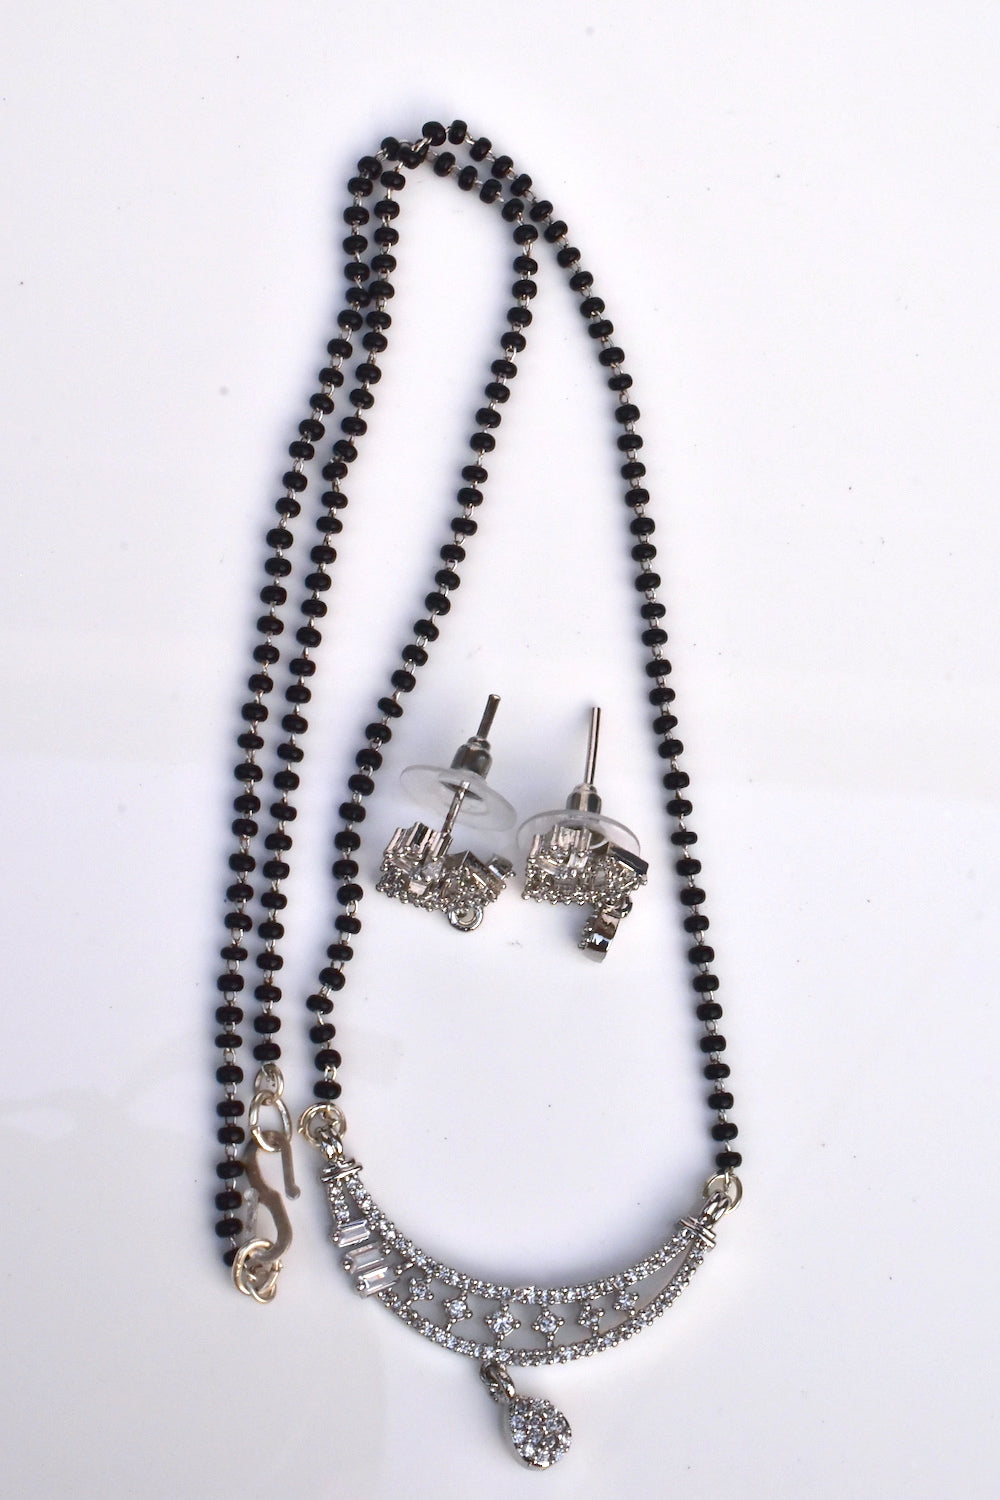 ad silver necklace set